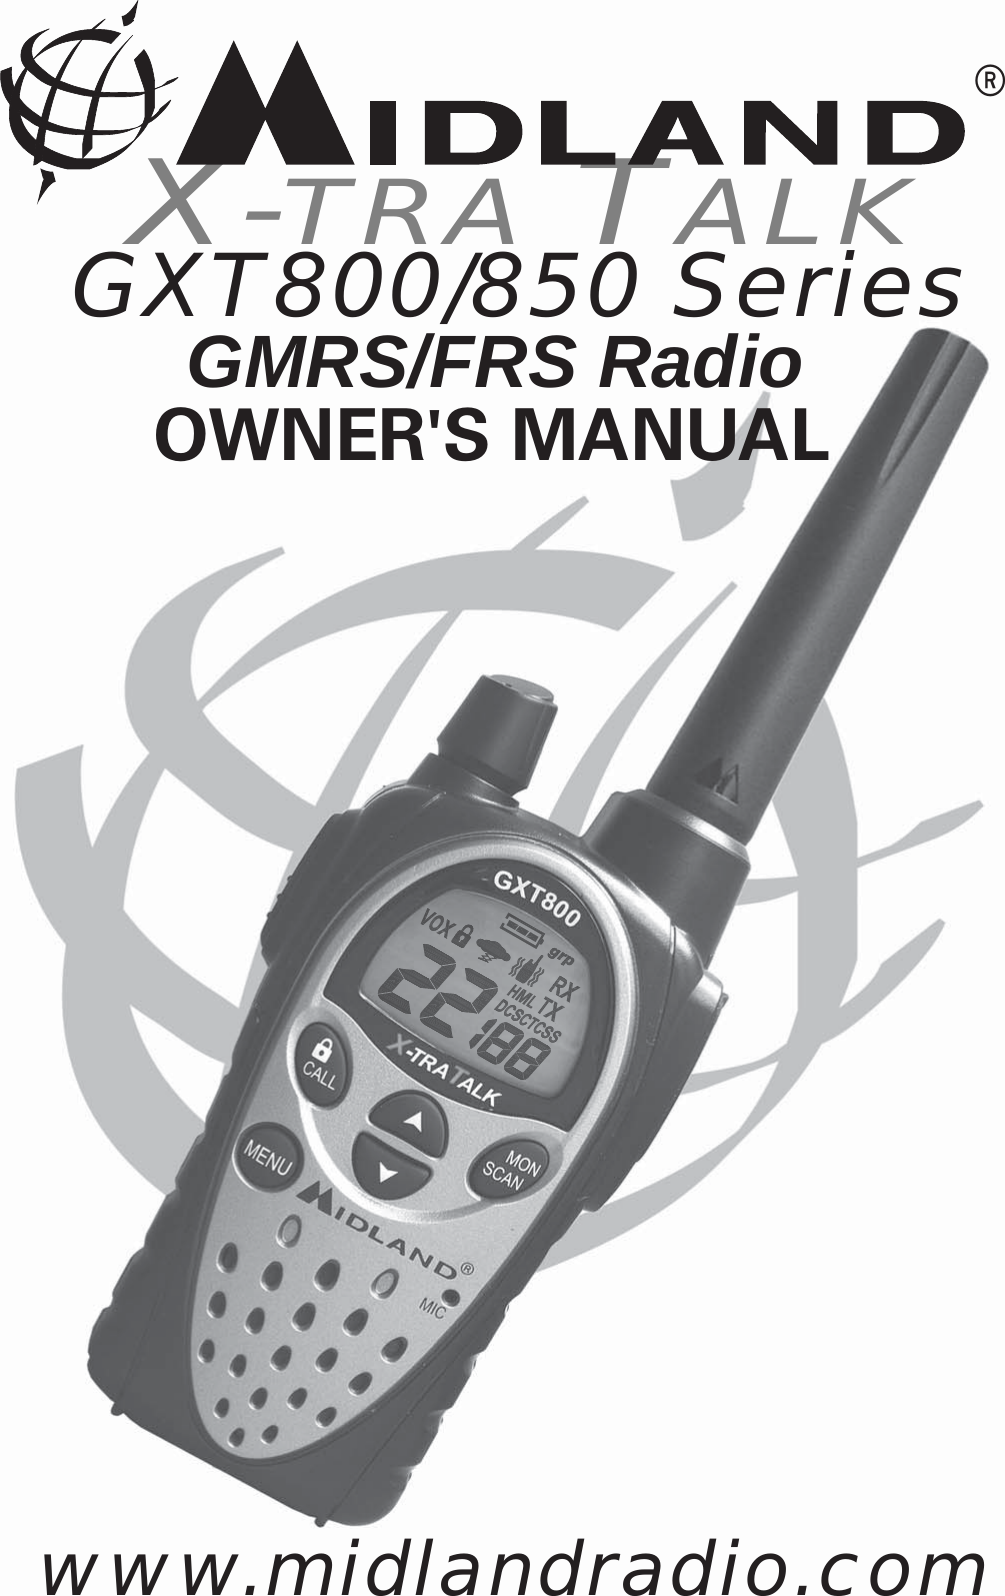   GXT800/850 Series         GMRS/FRS RadioX-TRA TALK®OWNER&apos;S MANUALwww.midlandradio.com